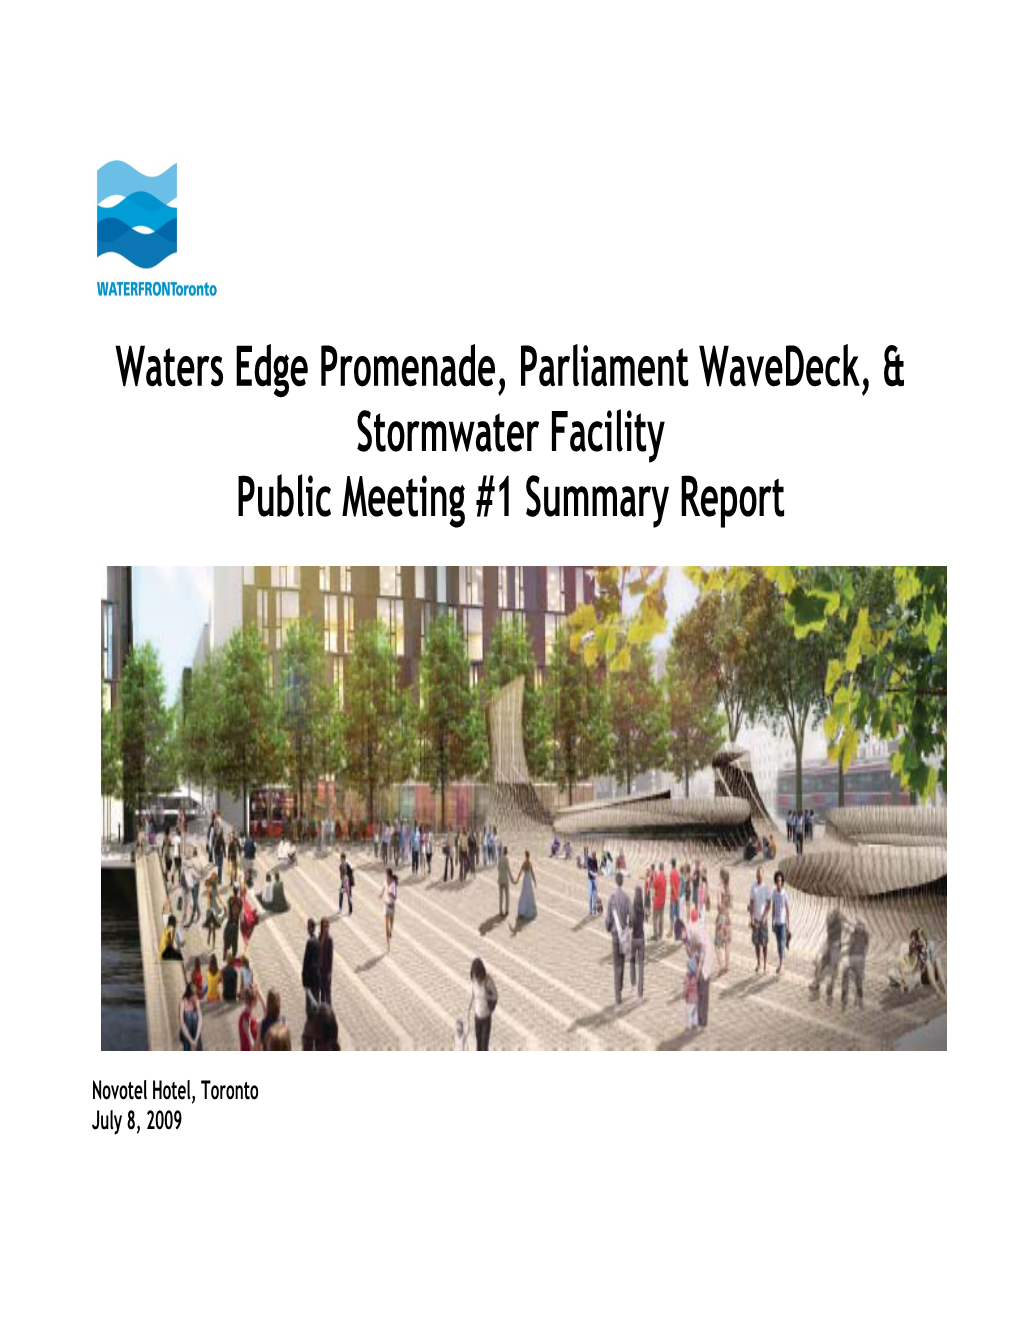 Waters Edge Promenade, Parliament Wavedeck, & Stormwater Facility